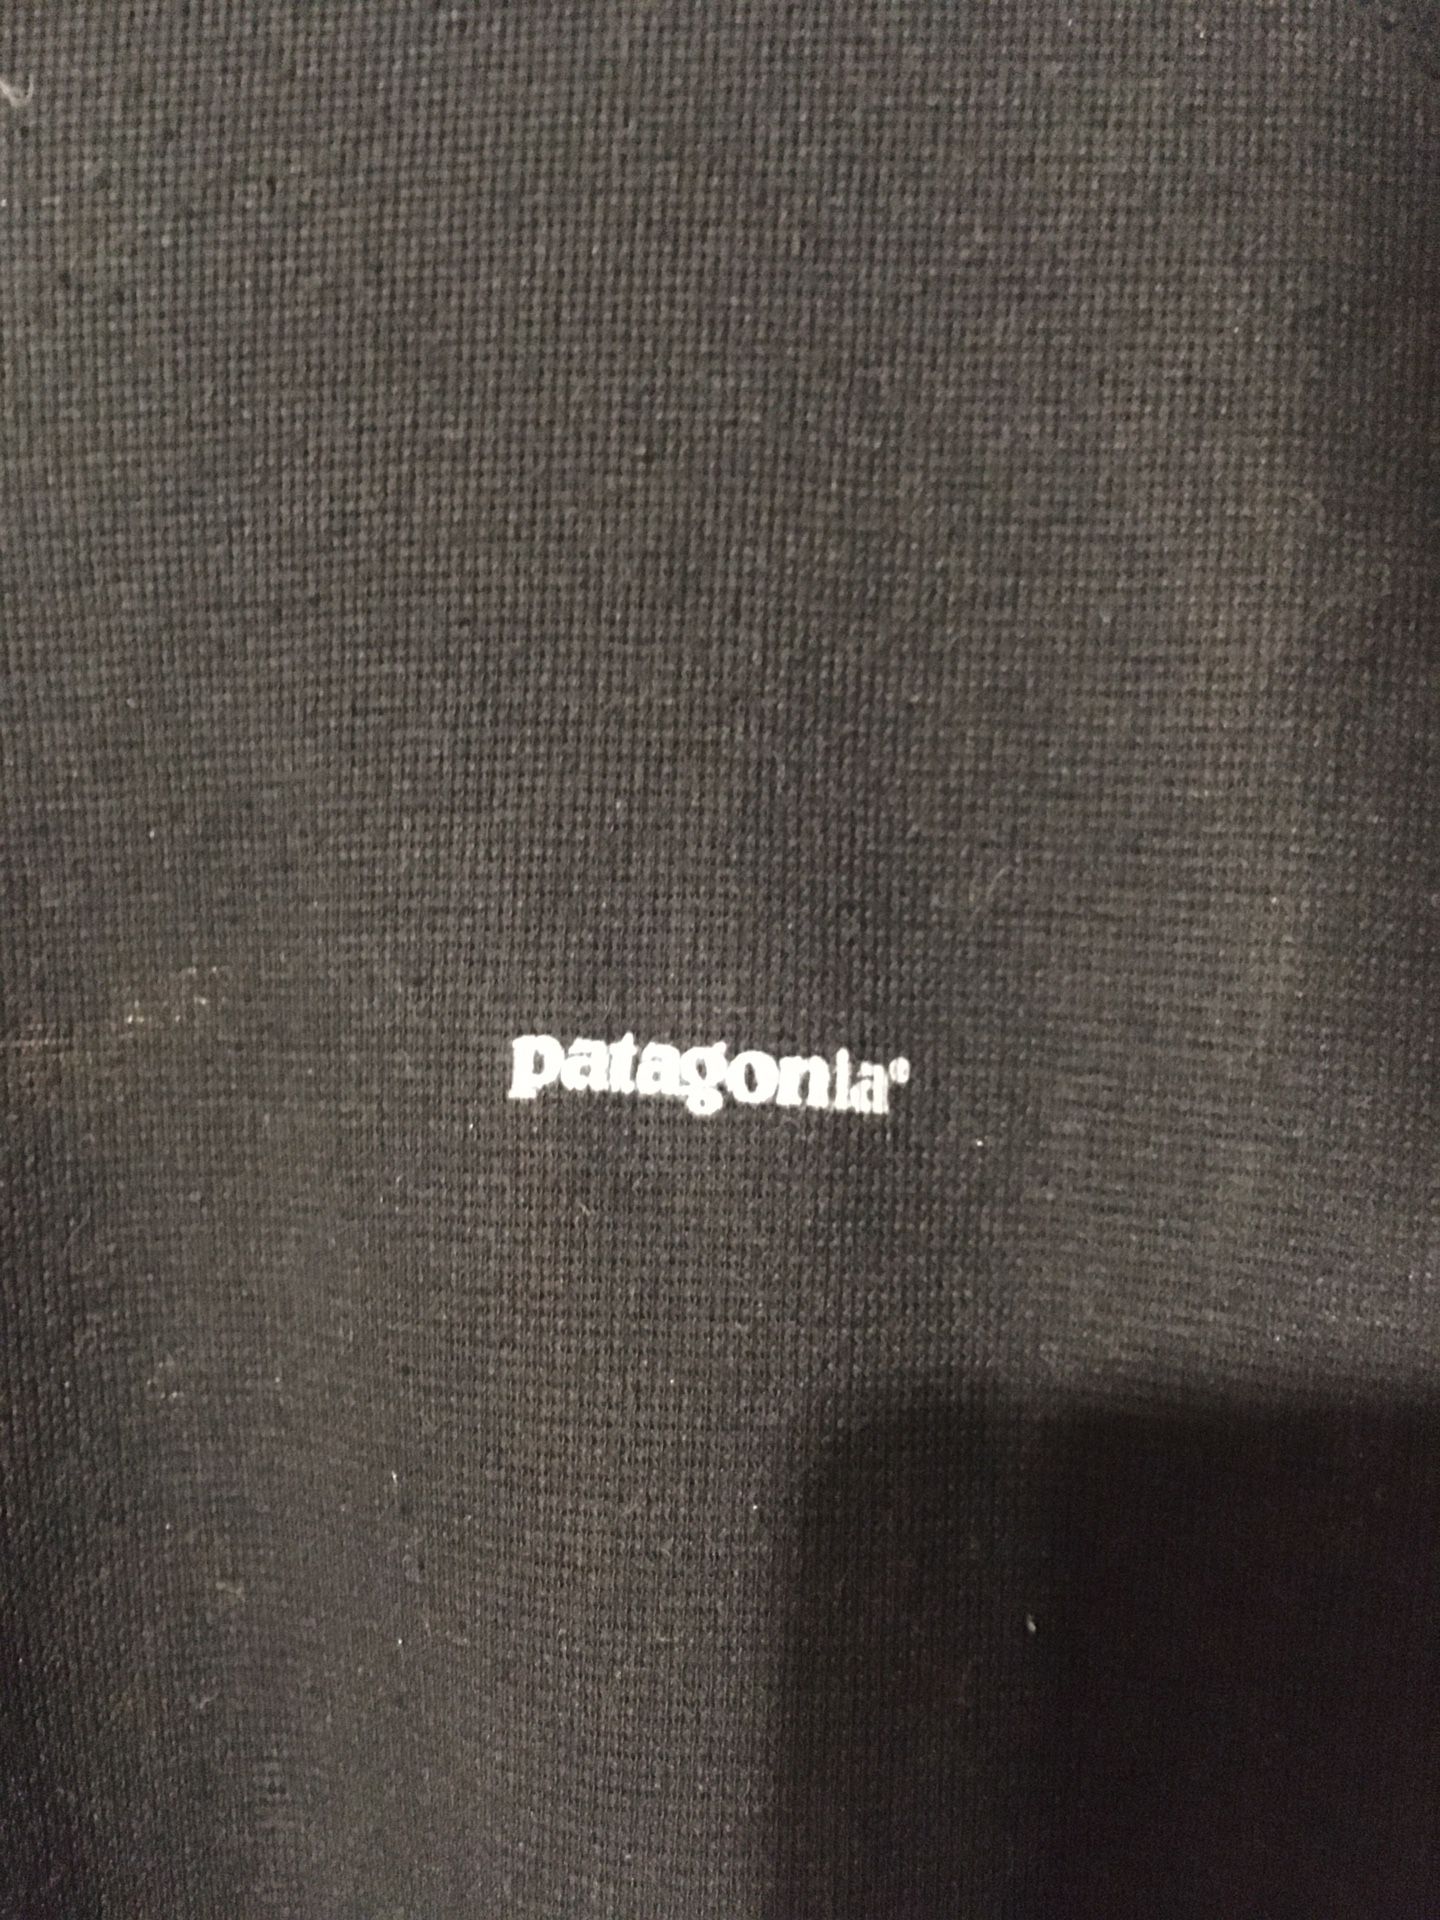 Patagonia thermal t shirt XL